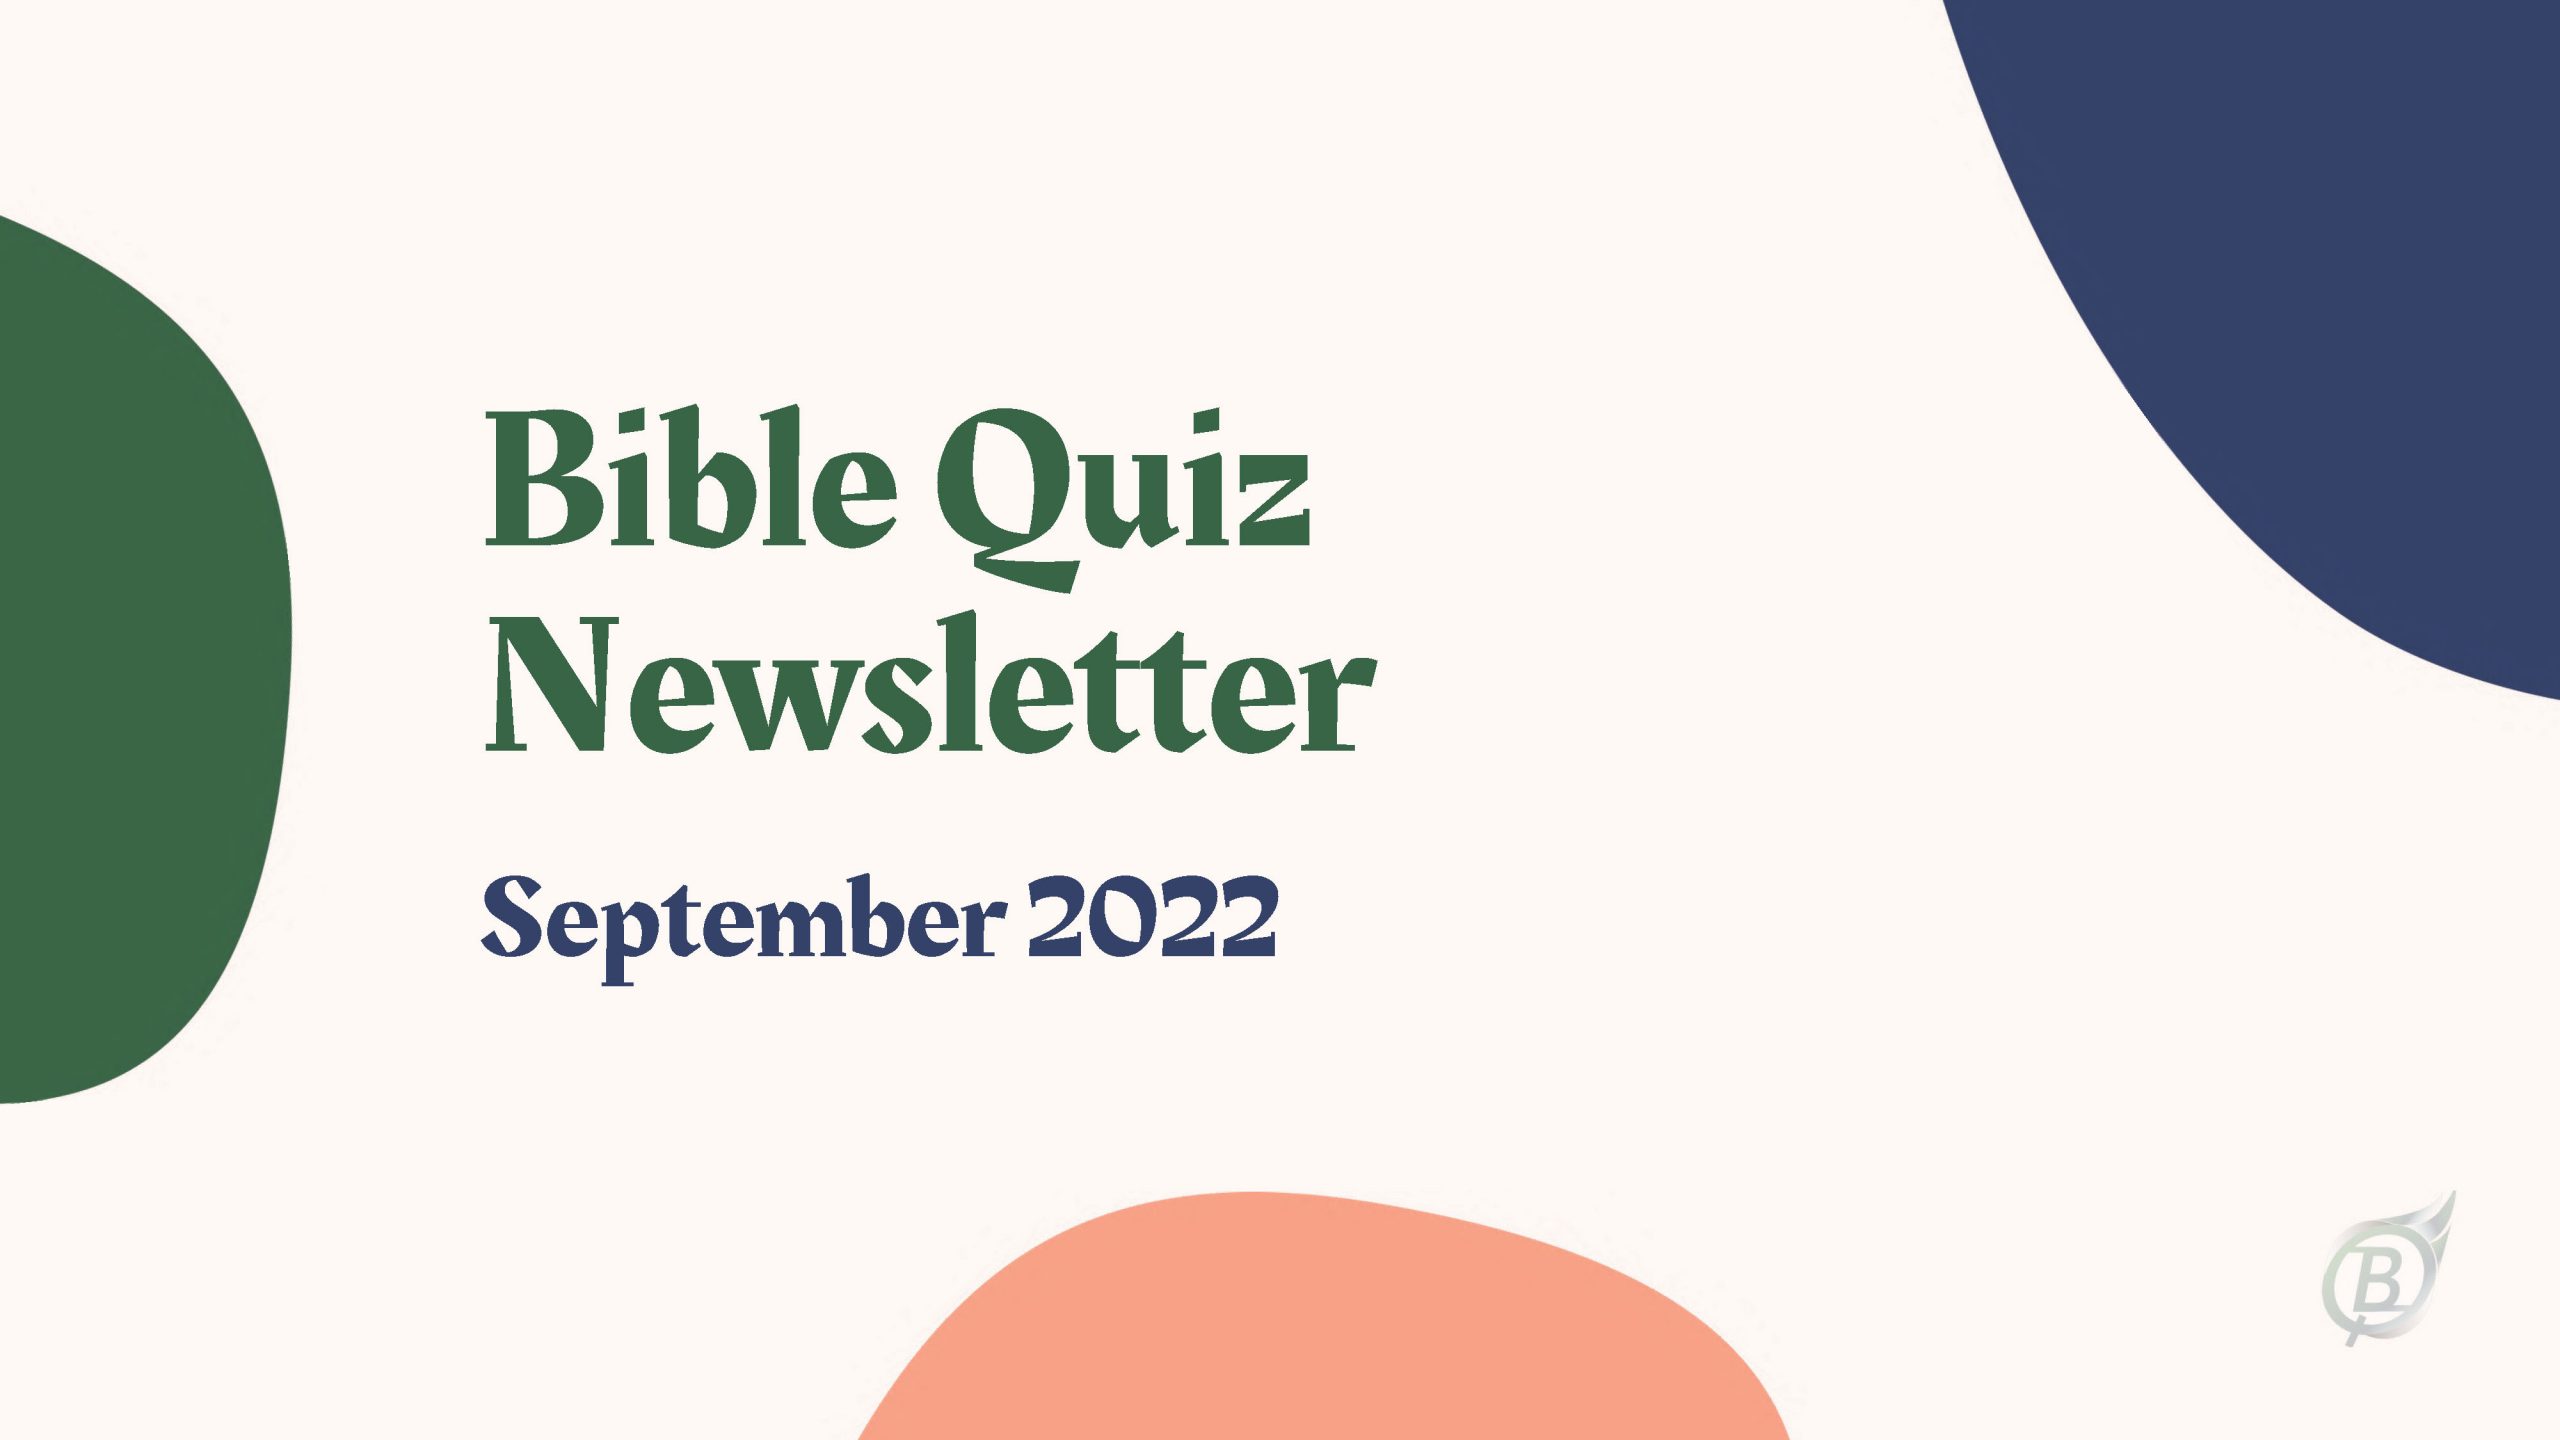 Bible Quiz Newsletter - September 2022